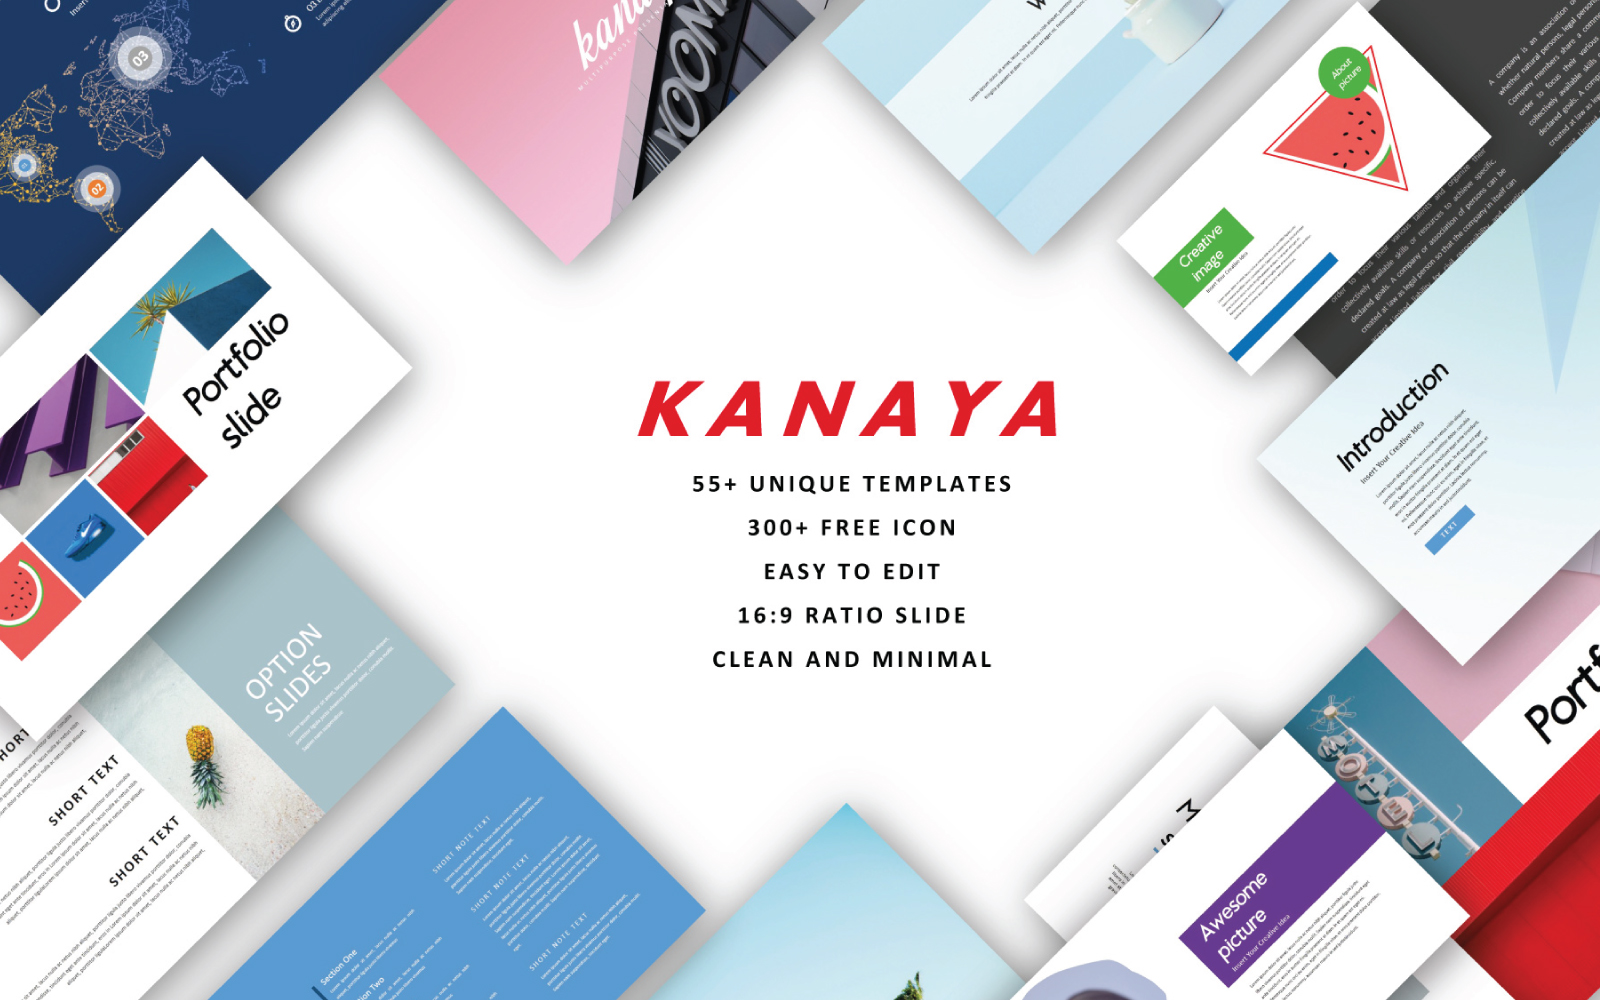 Kanaya - Google Slide Template